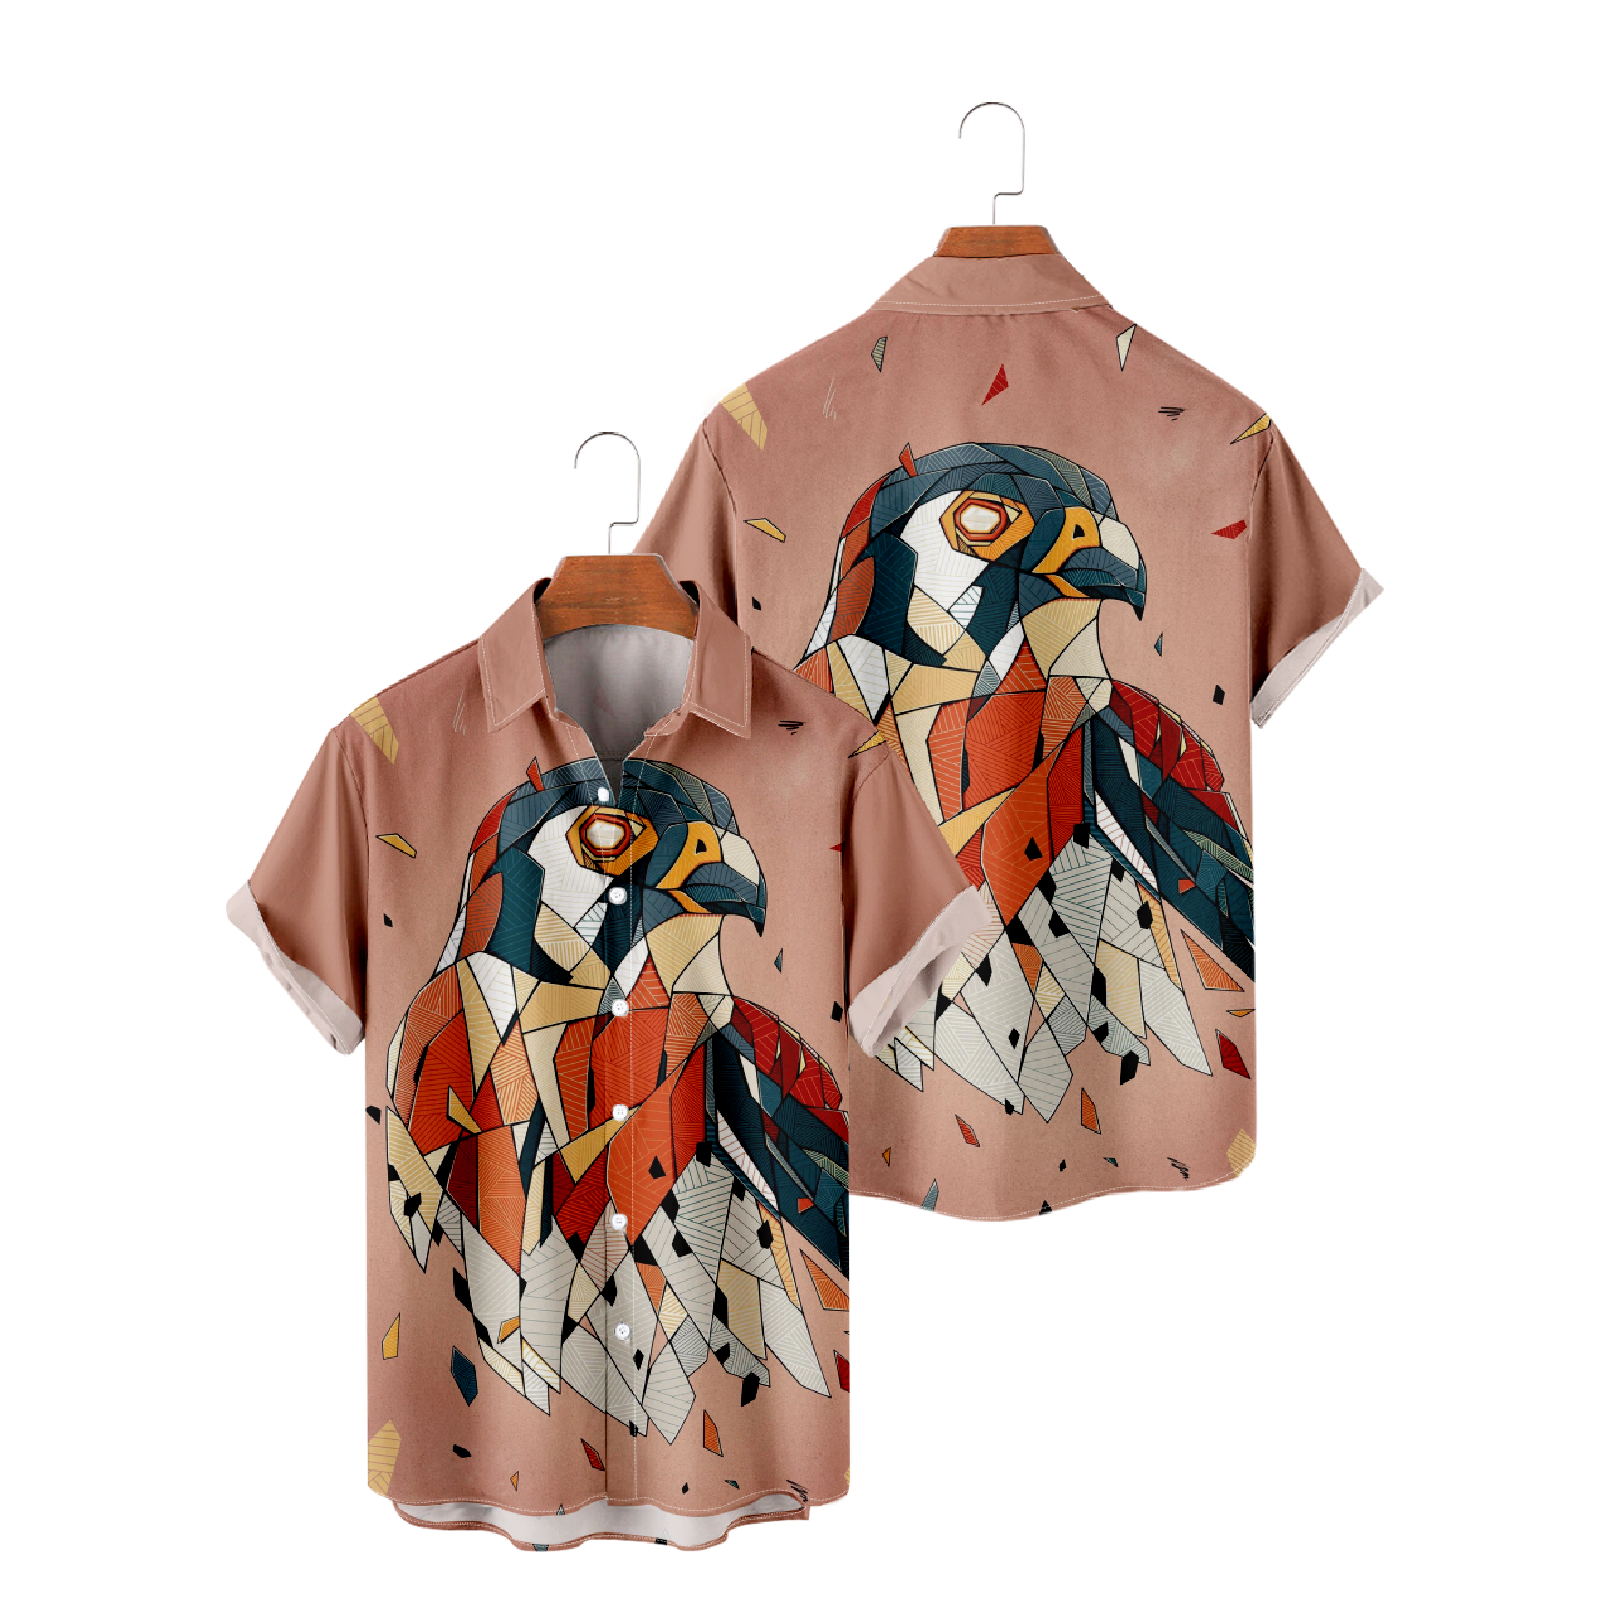 Eagle Button Up Shirt Allover Print Short Sleeve Shirt Men's Casual Tops